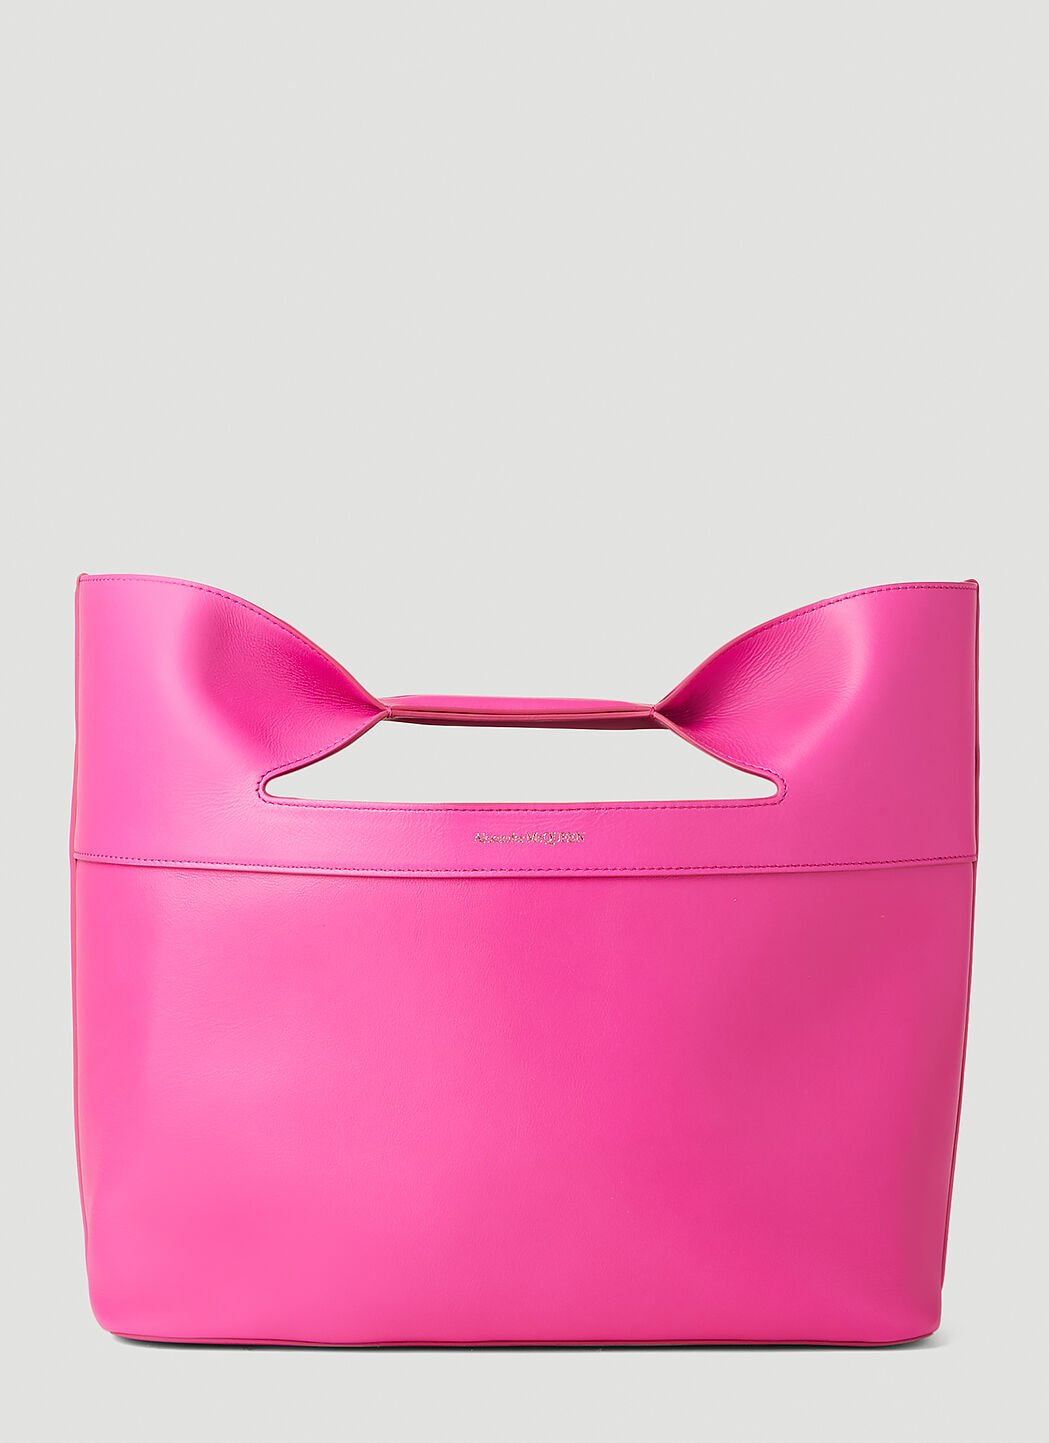 Alexander McQueen The Bow Small Handbag Pink amq0251077